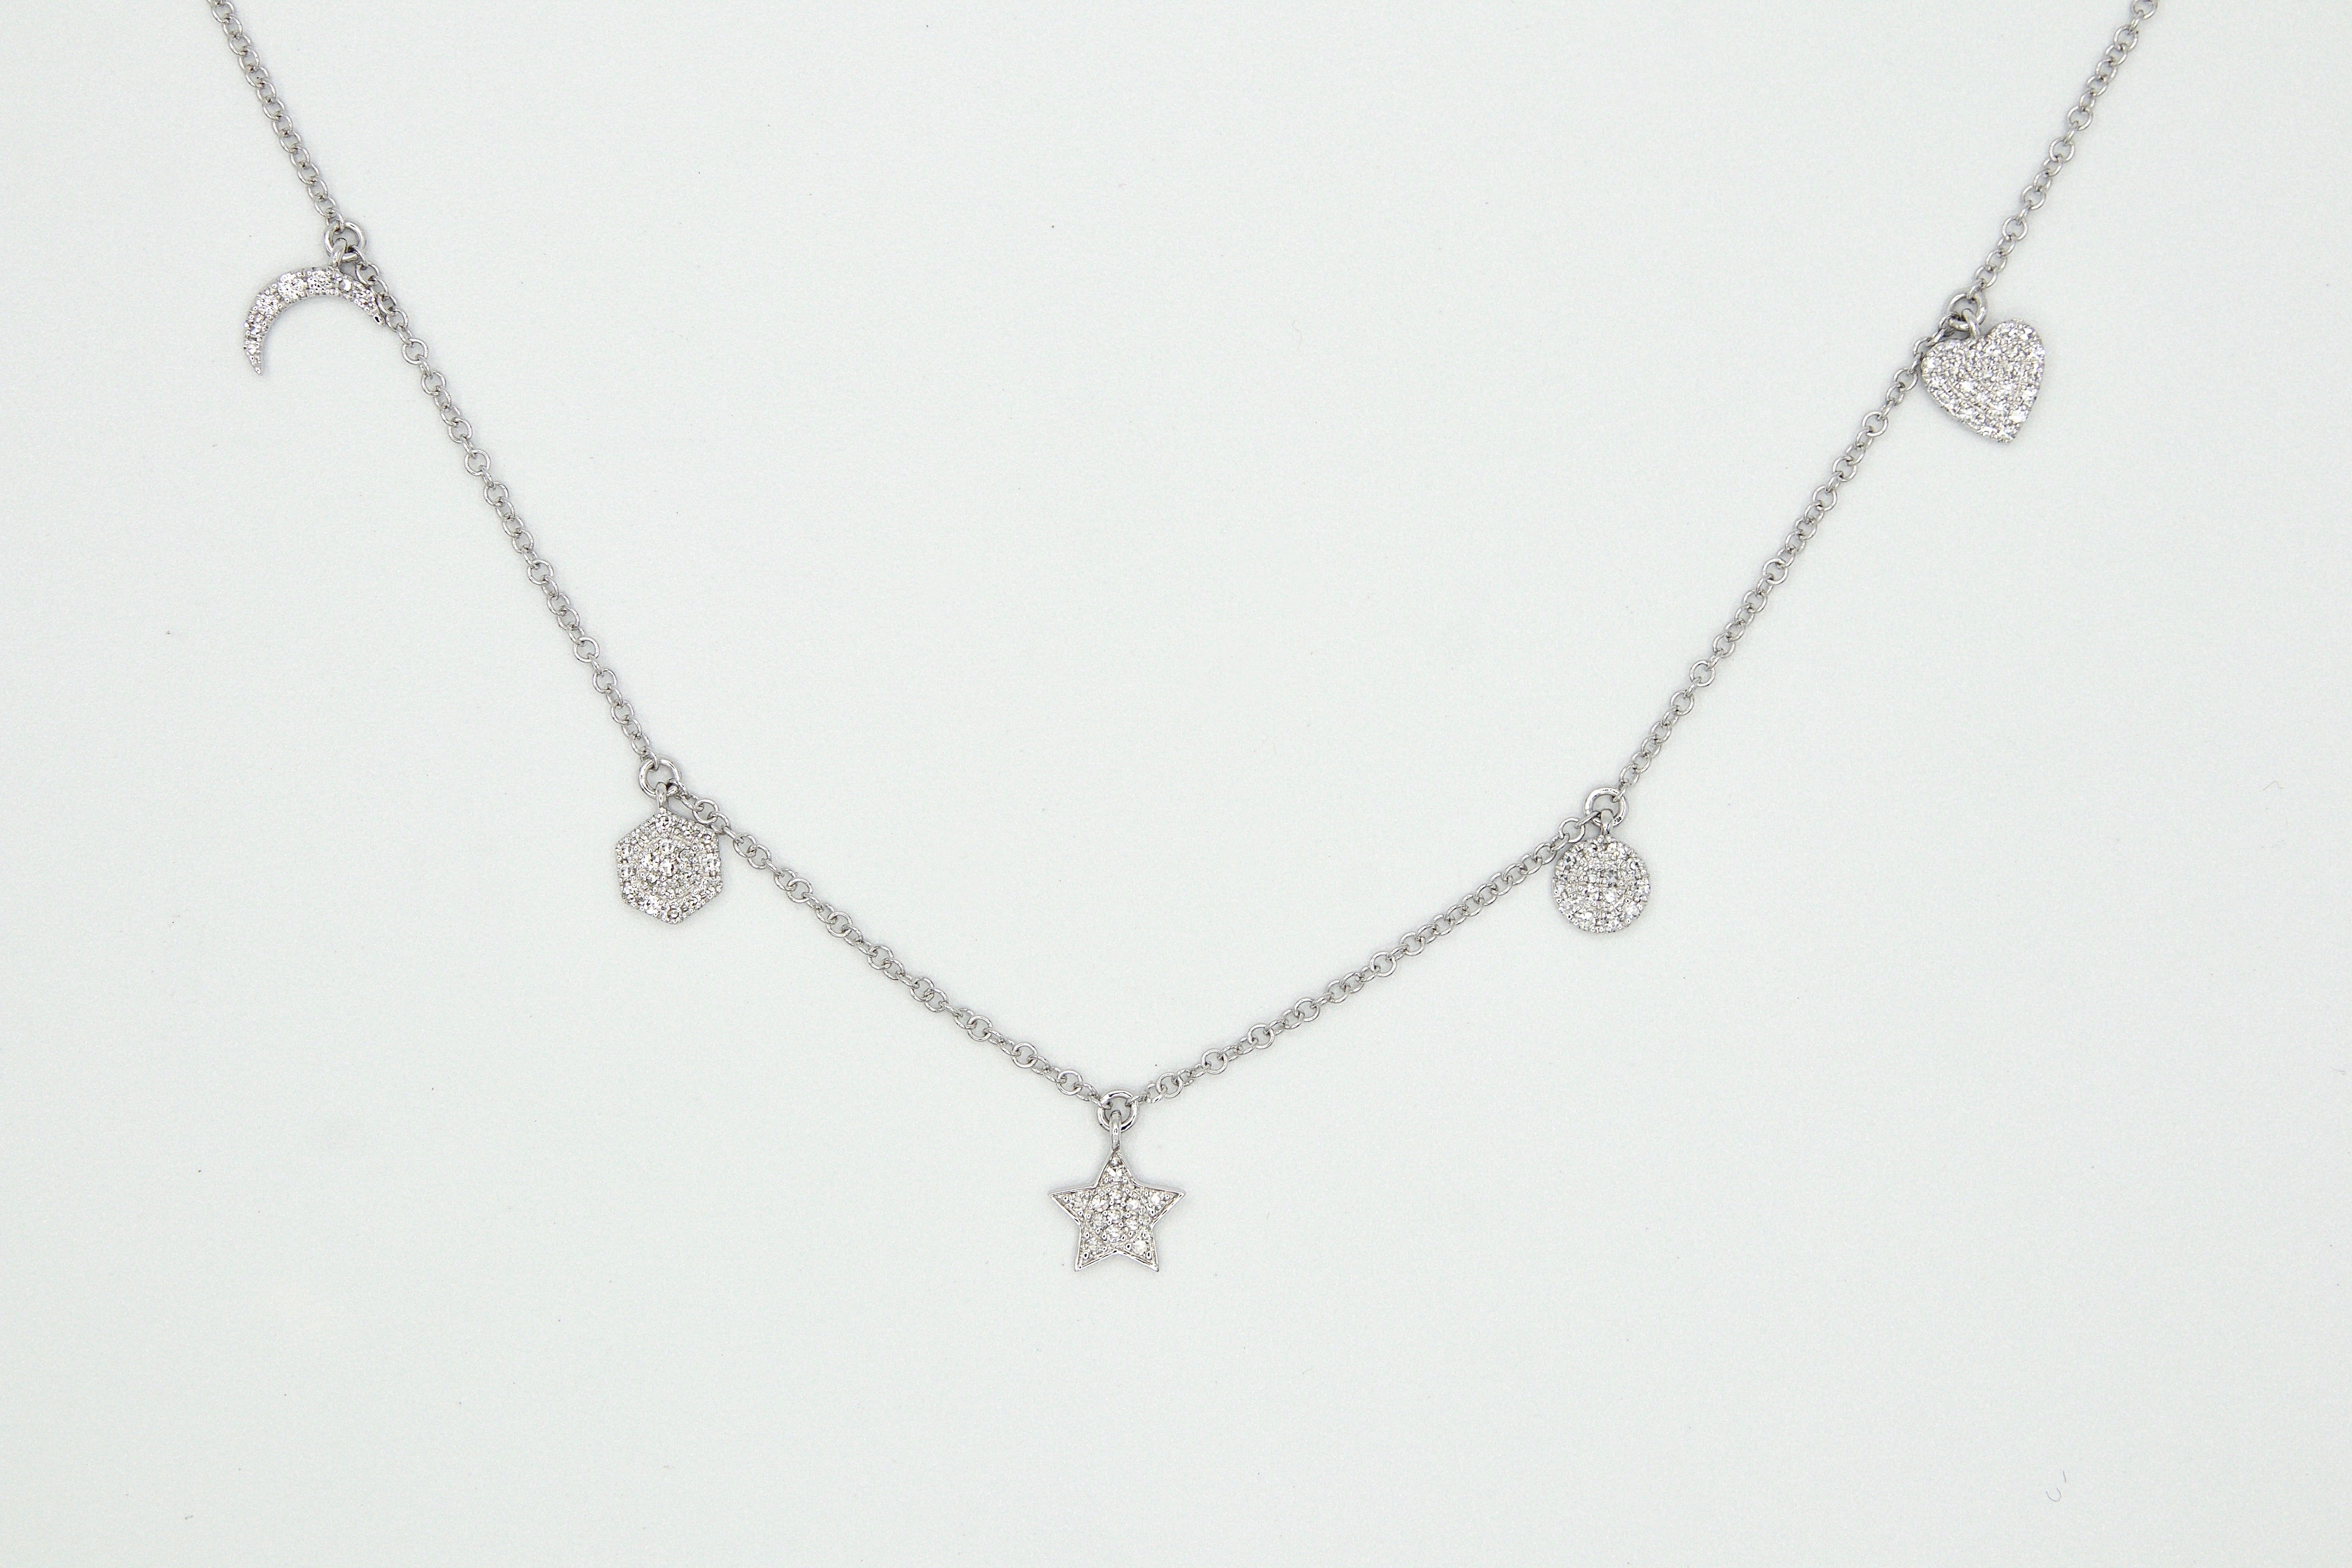 Adjustable 14k White Gold Diamond Charm Necklace